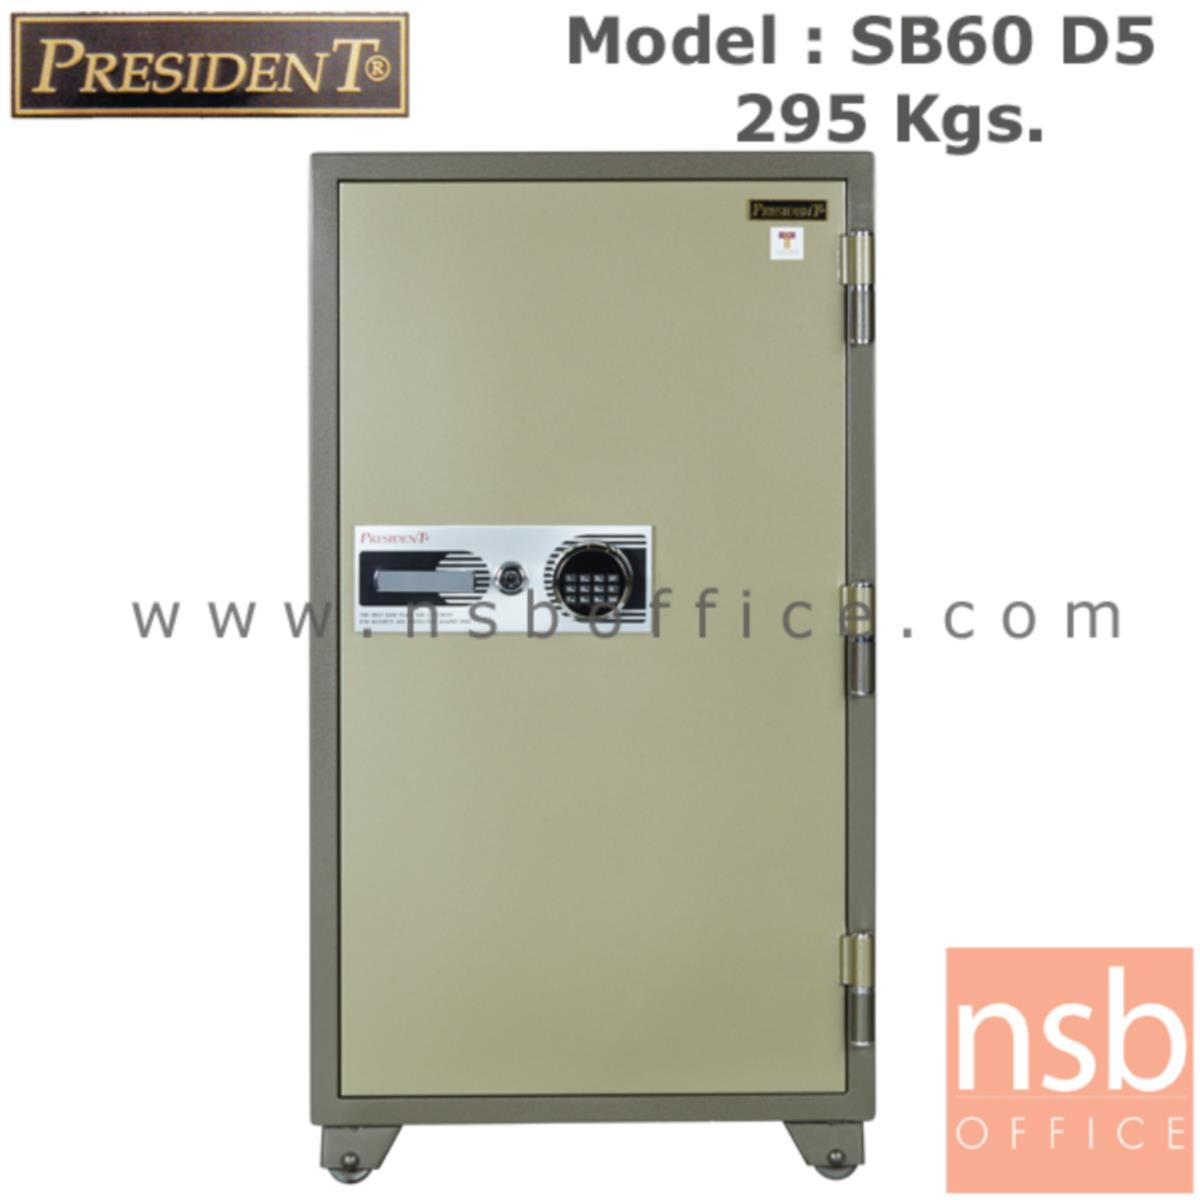 F05A064: ตู้เซฟนิรภัยชนิดดิจิตอลแบบใหม่ 295 กก.  รุ่น PRESIDENT-SB60D5  มี 1 กุญแจ 1 รหัส (รหัสใช้กดหน้าตู้)